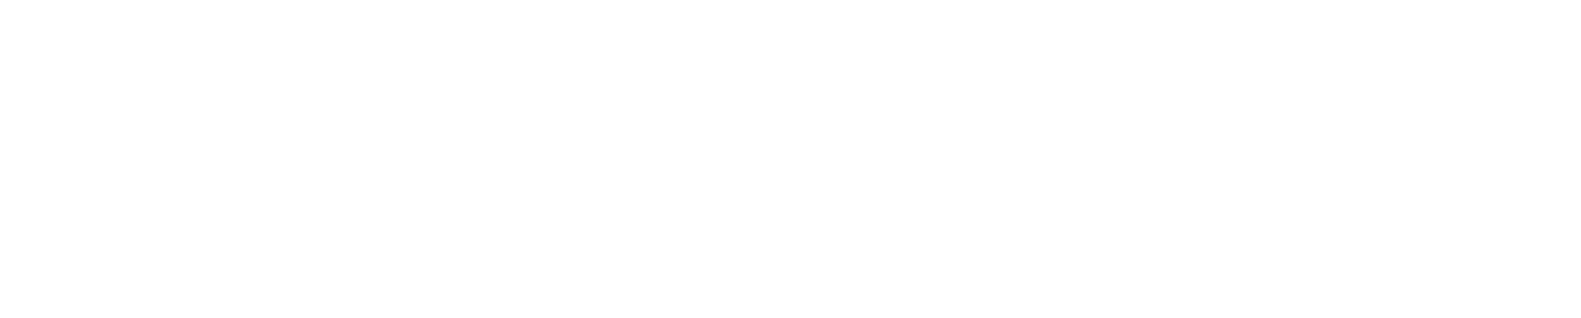 Investors Title Company
 logo large for dark backgrounds (transparent PNG)